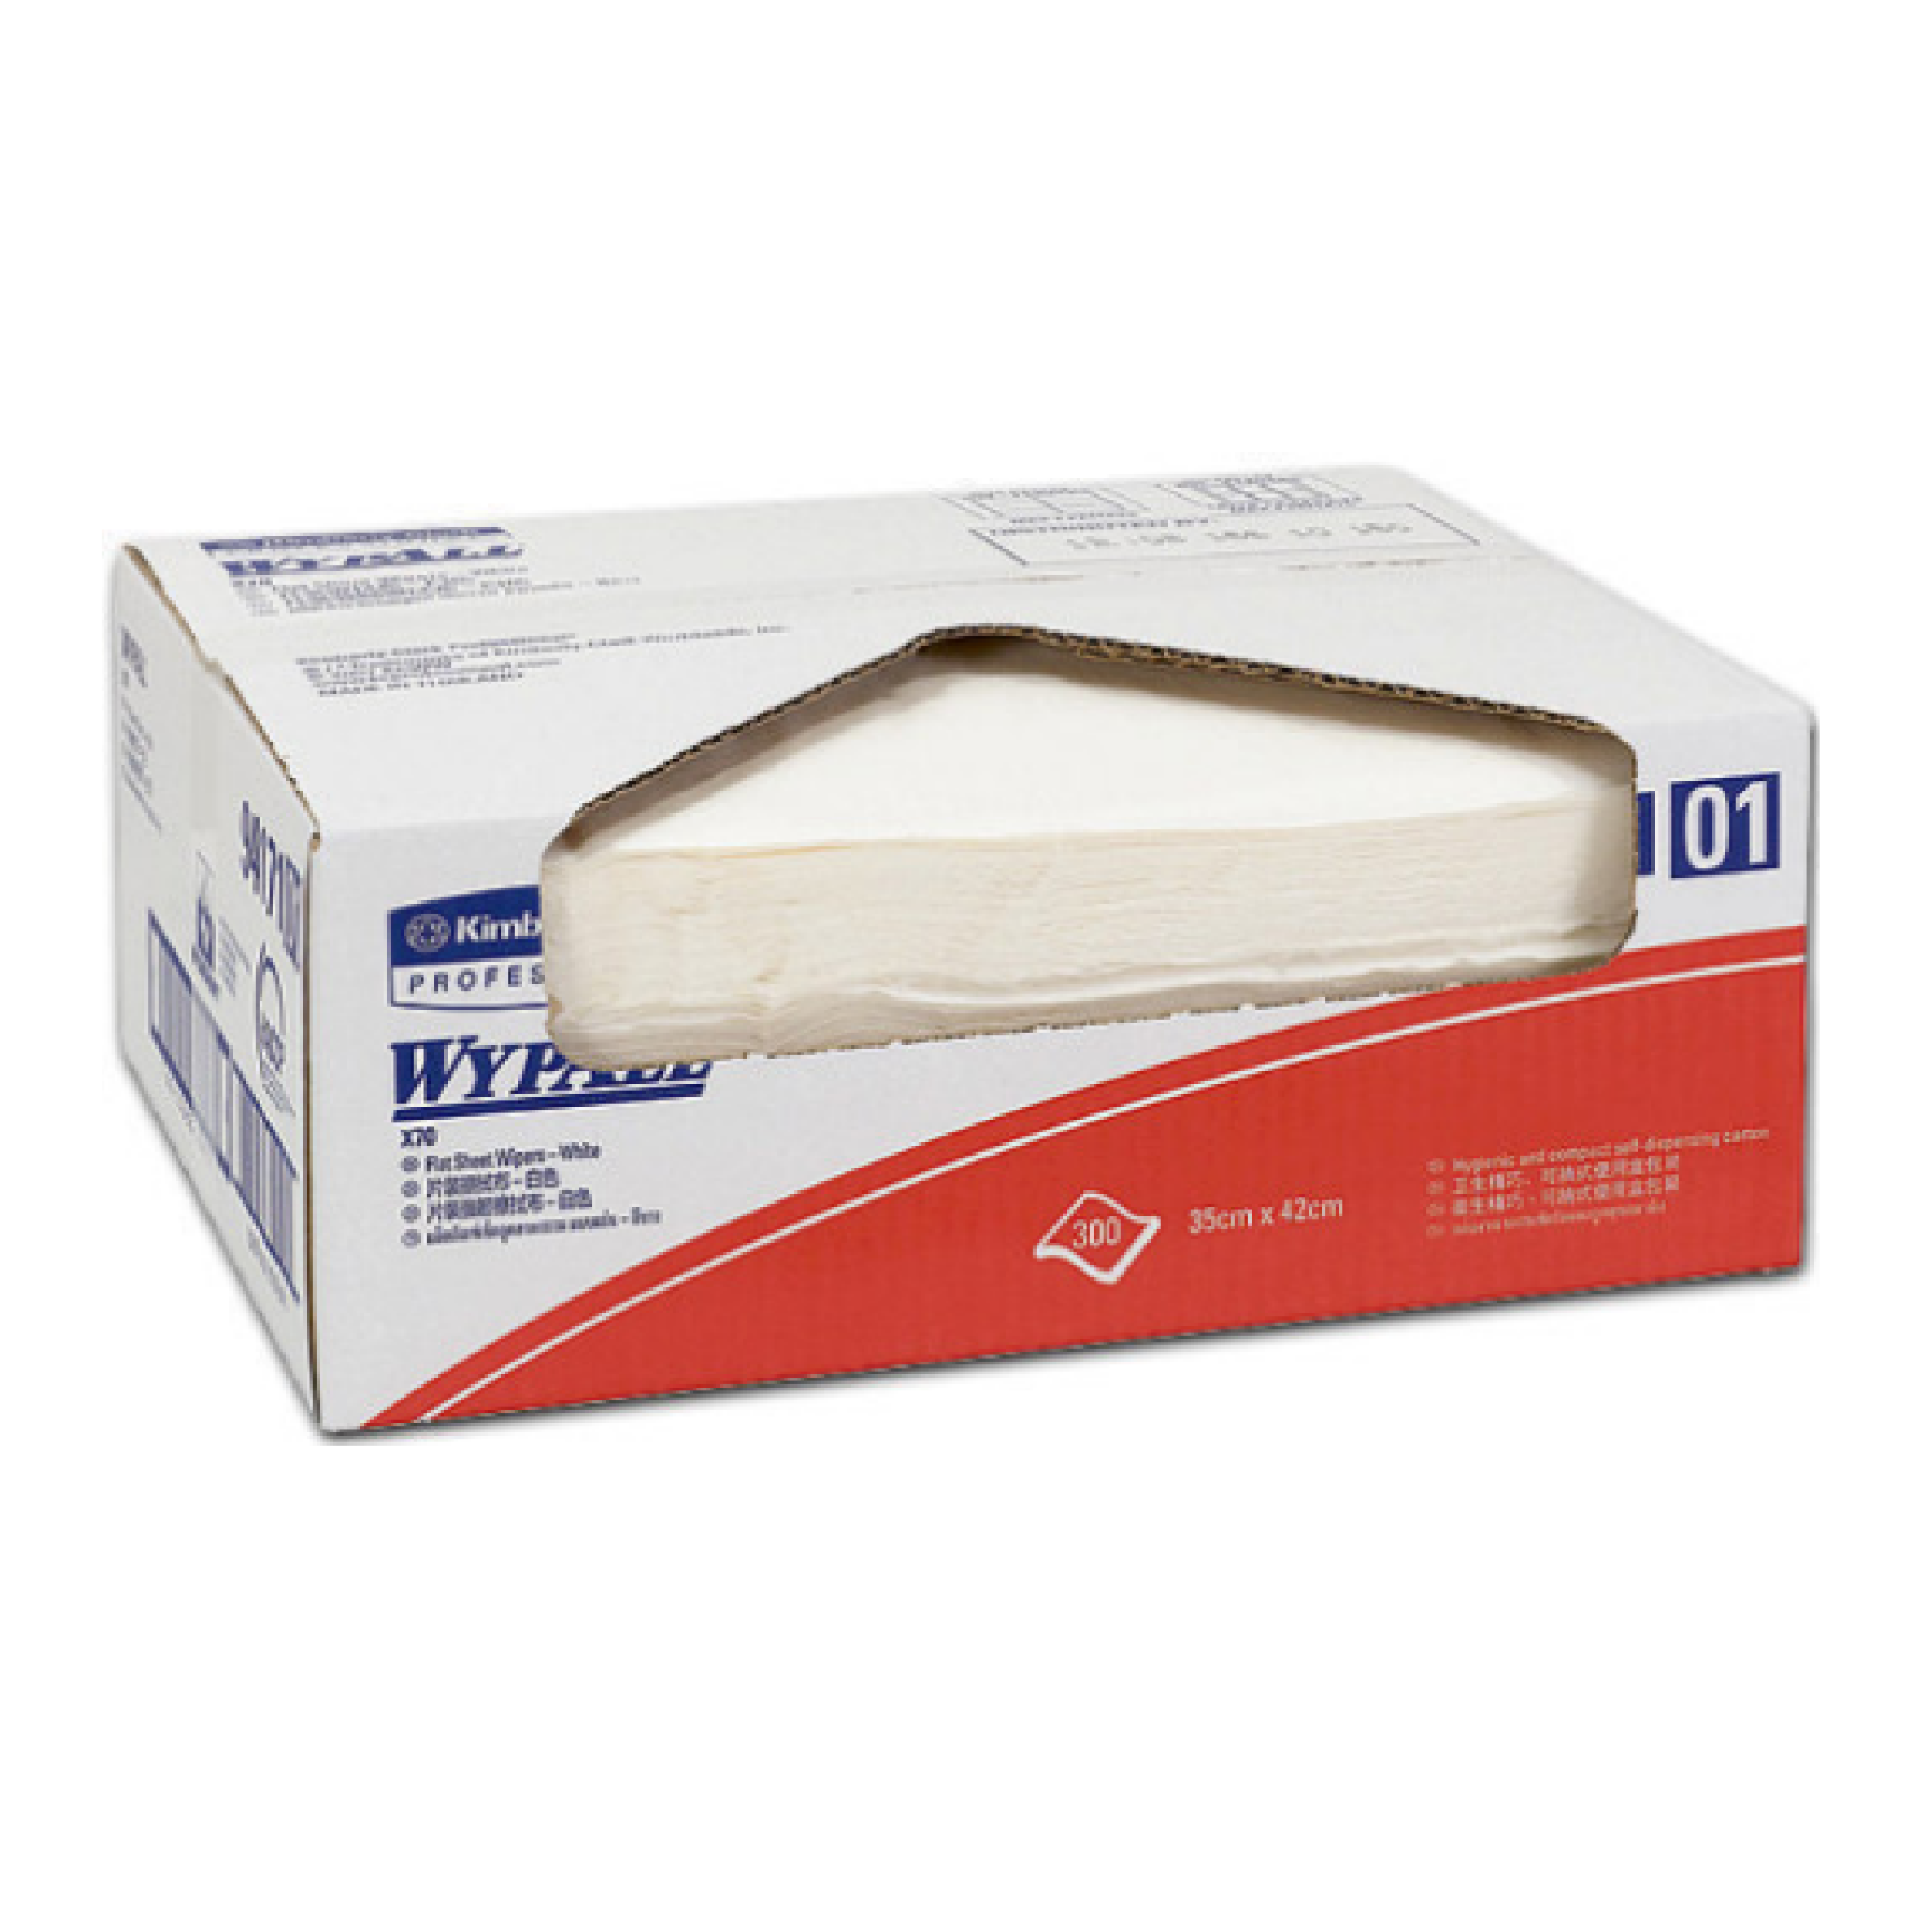 Kimberly Clark WYPALL X70 FLAT SHEET Wiper 10 BOXES/CARTON